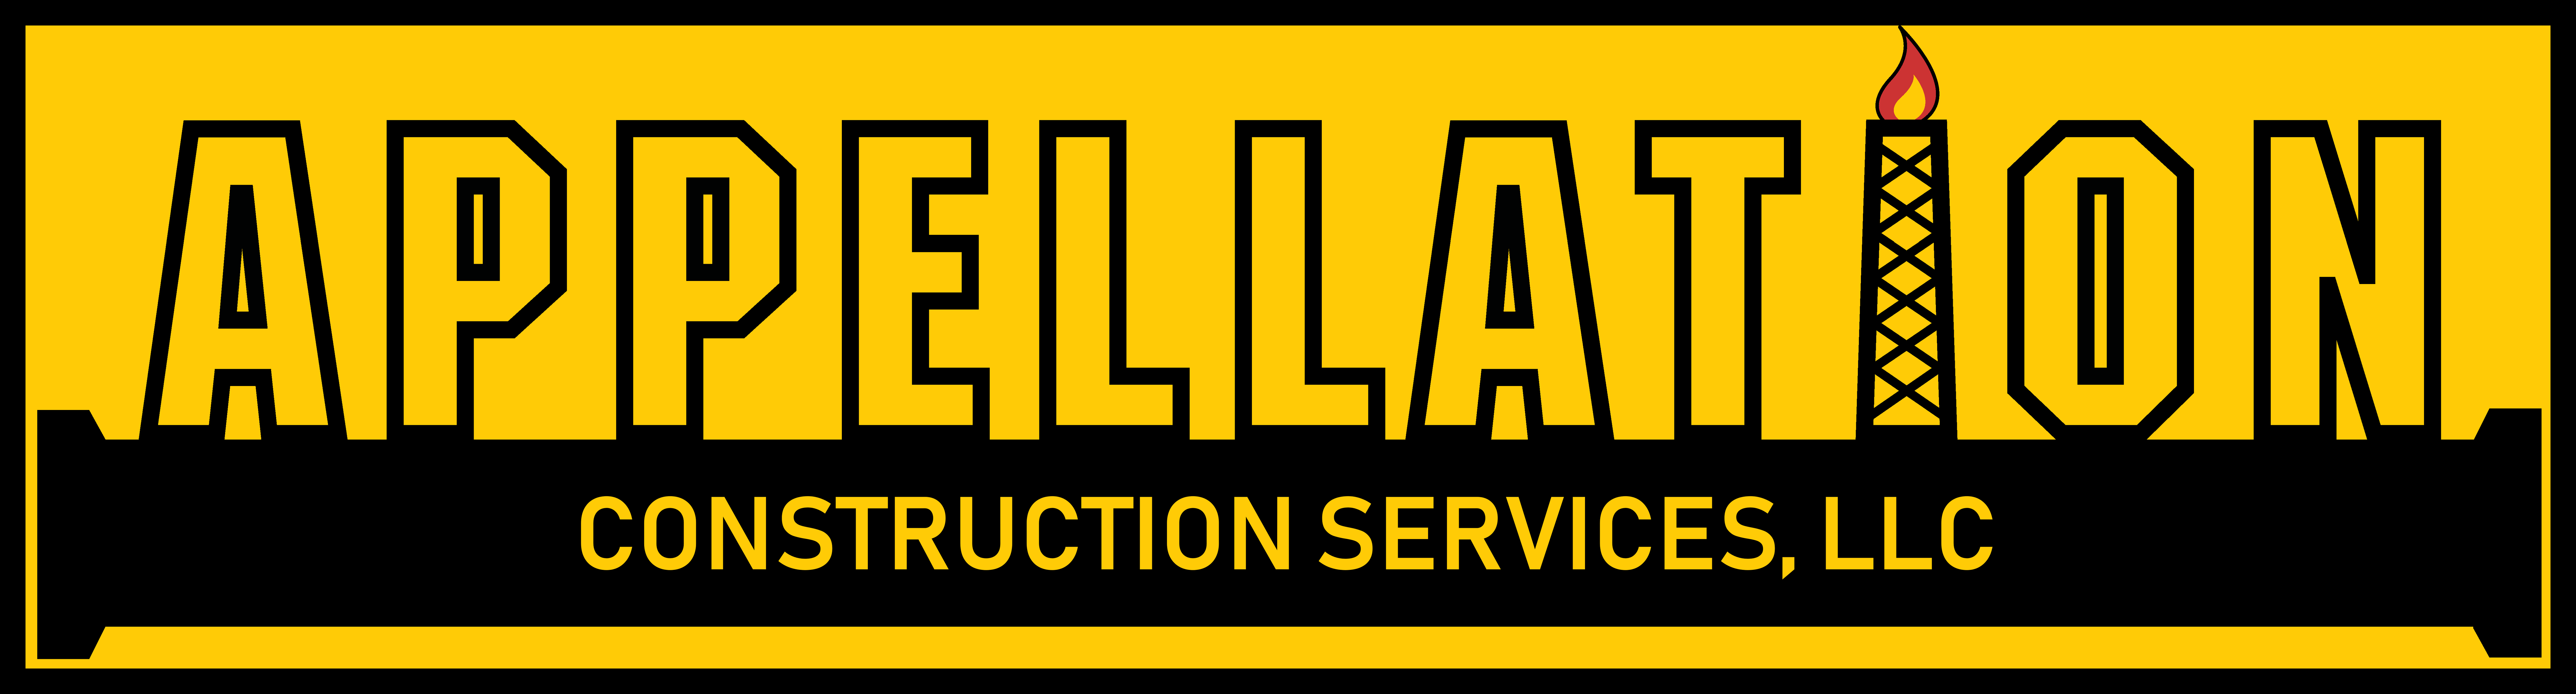 Appellation Construction Services, LLC